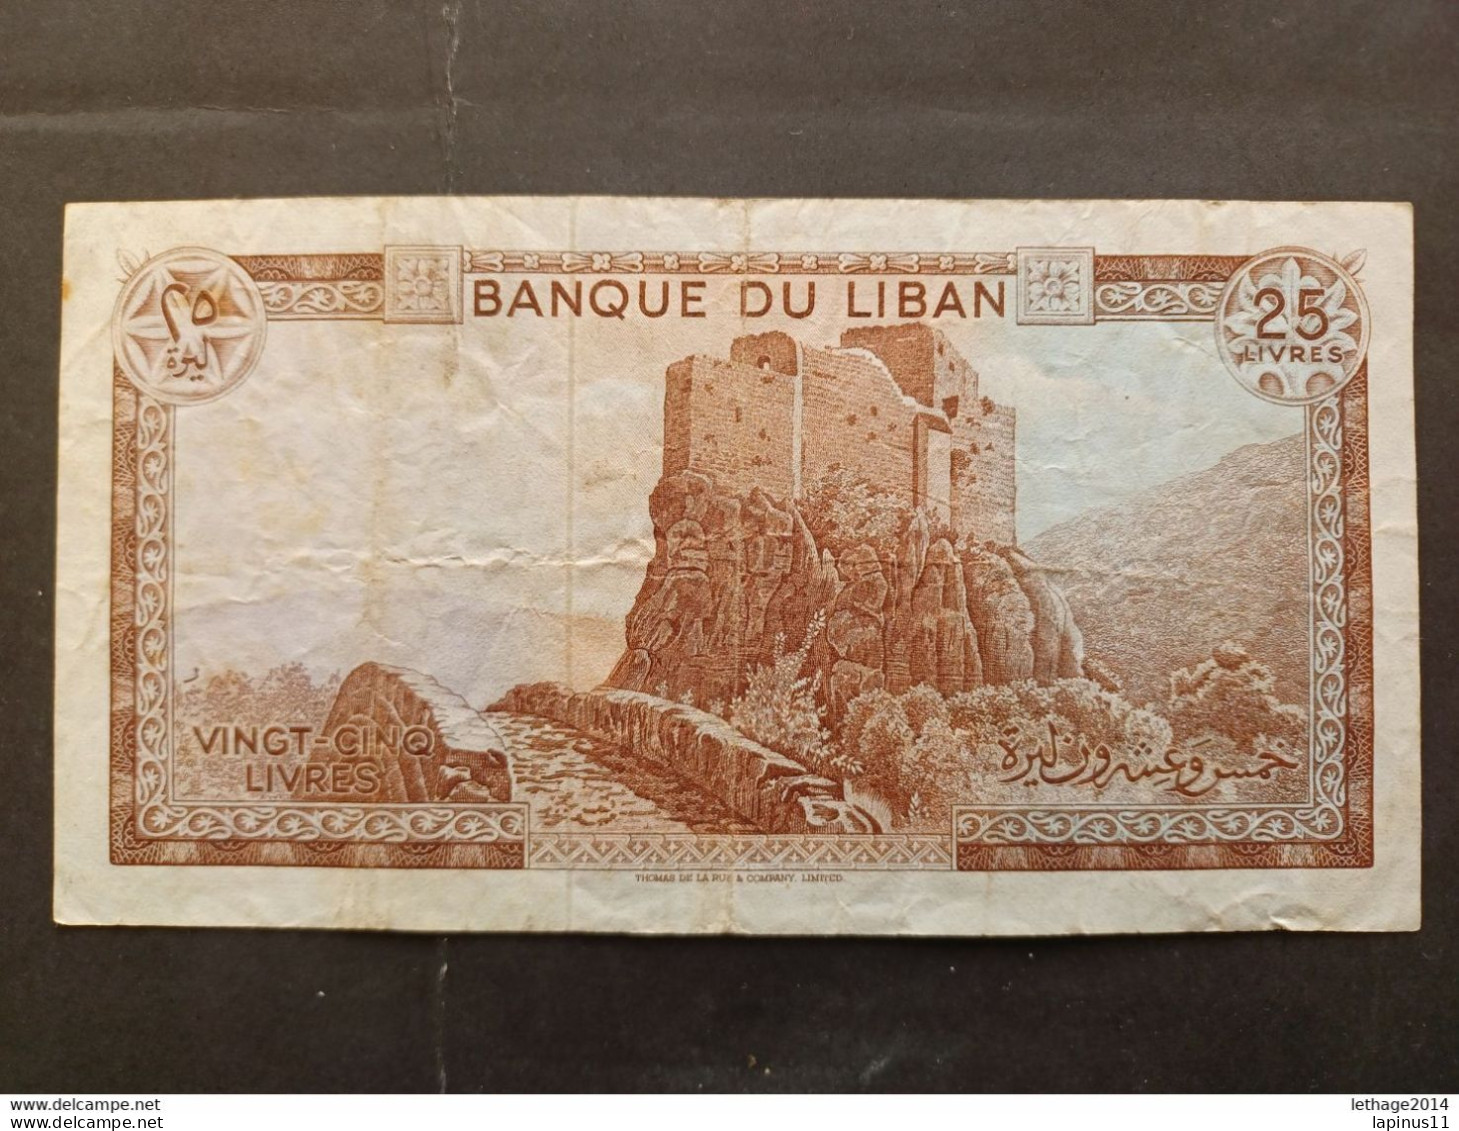 BANKNOTE LEBANON لبنان LIBAN 6x25 LIVRES 1974 CIRCULATED GOOD CONDITION - Libano